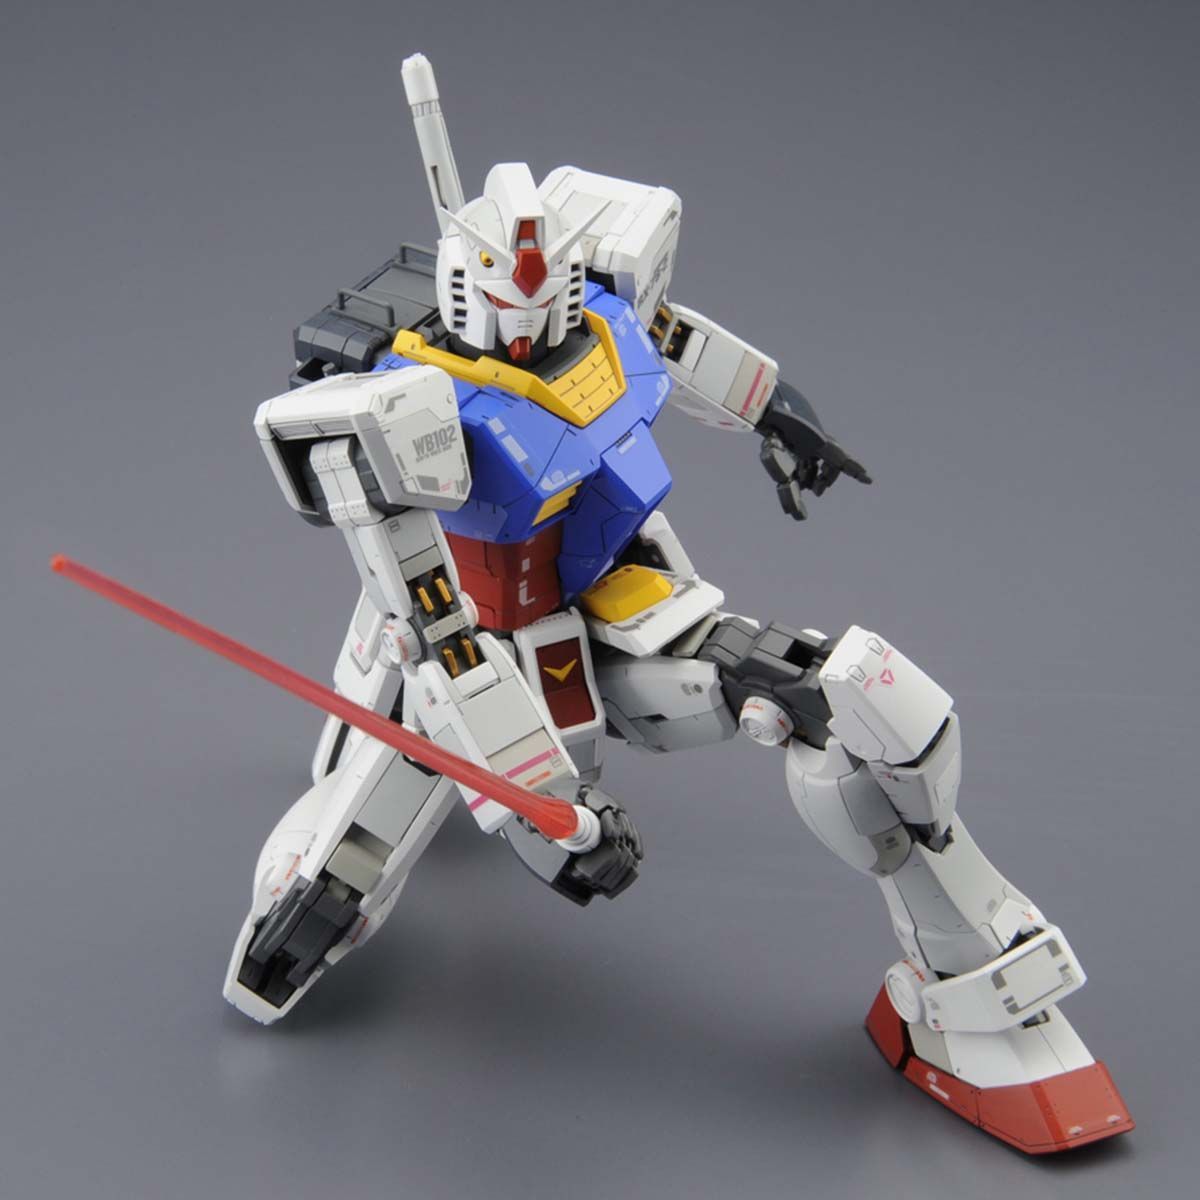 MG 1/100 No.172 RX-78-2 Gundam Ver.3.0